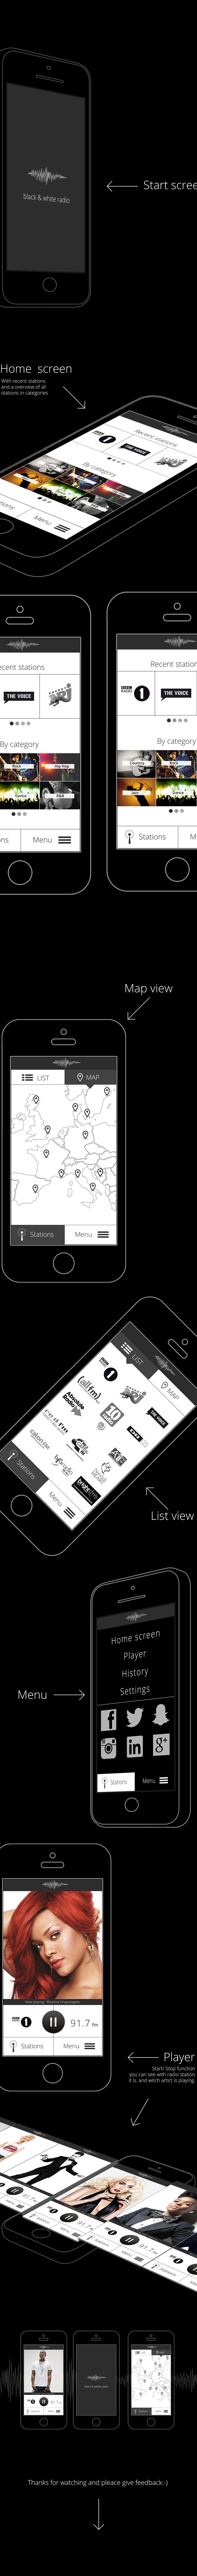 app app design Appdesign black and white Radio radio app mobile Mobile app allan ingwersen flat flat design black and whitedesign no colors Responsive Design Music Player